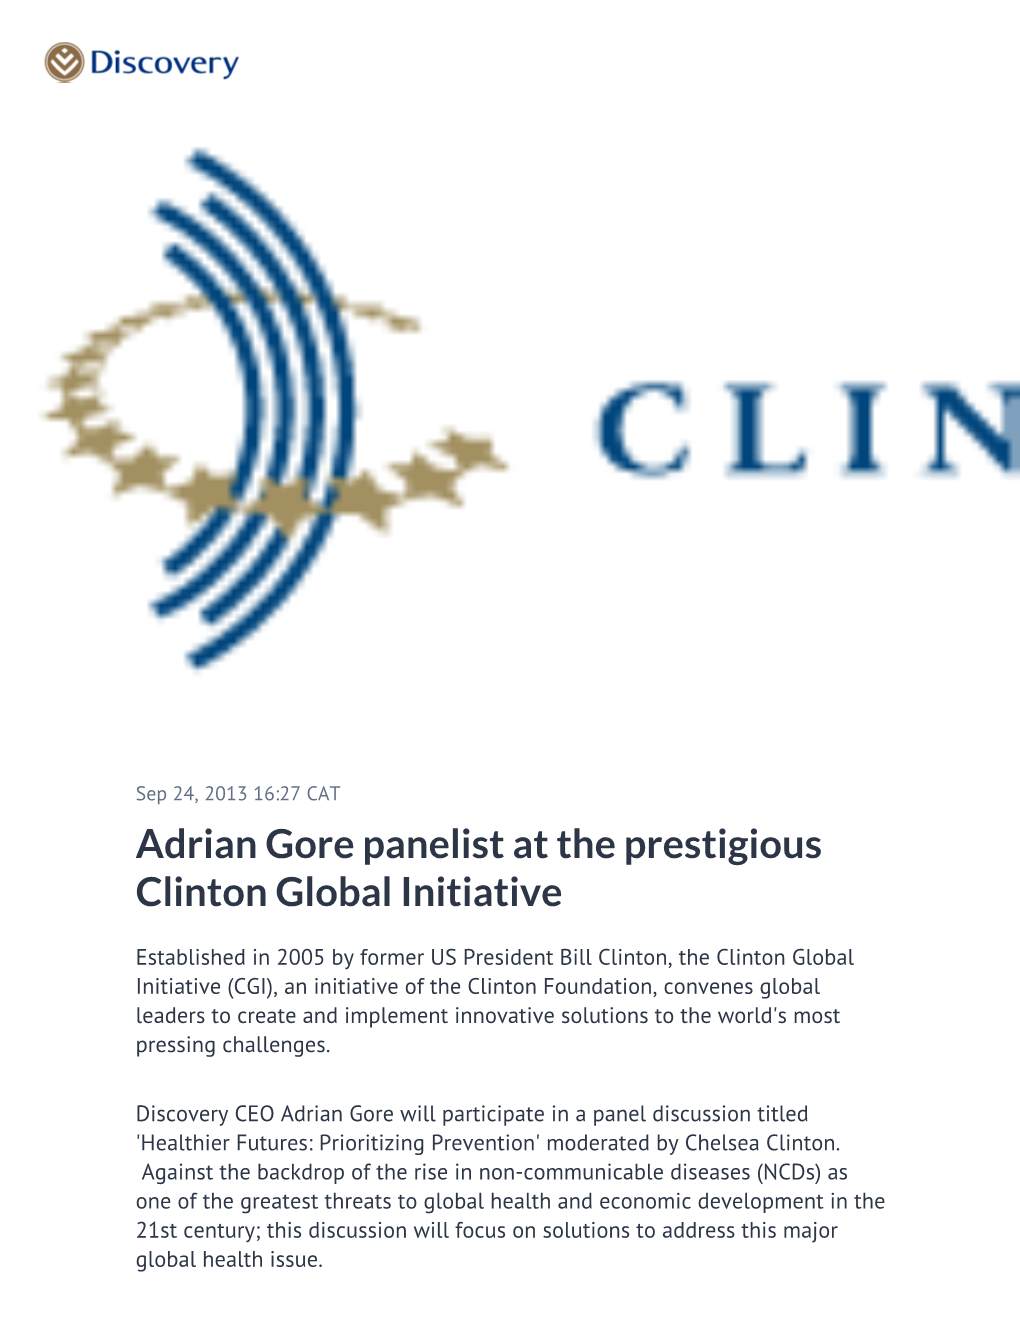 Adrian Gore Panelist at the Prestigious Clinton Global Initiative